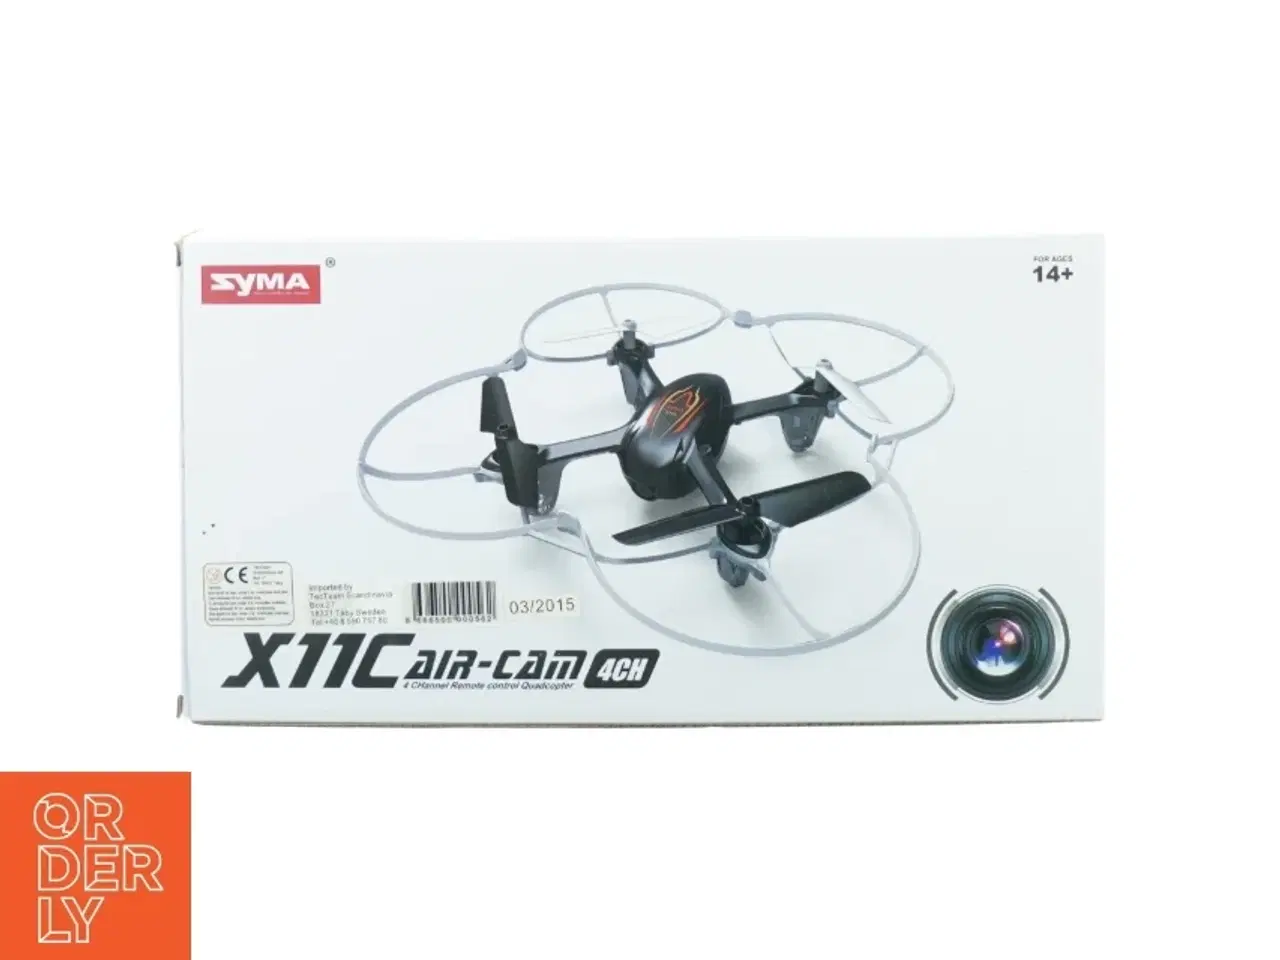 Billede 4 - Air cam drone fra Zyma (+14 år)